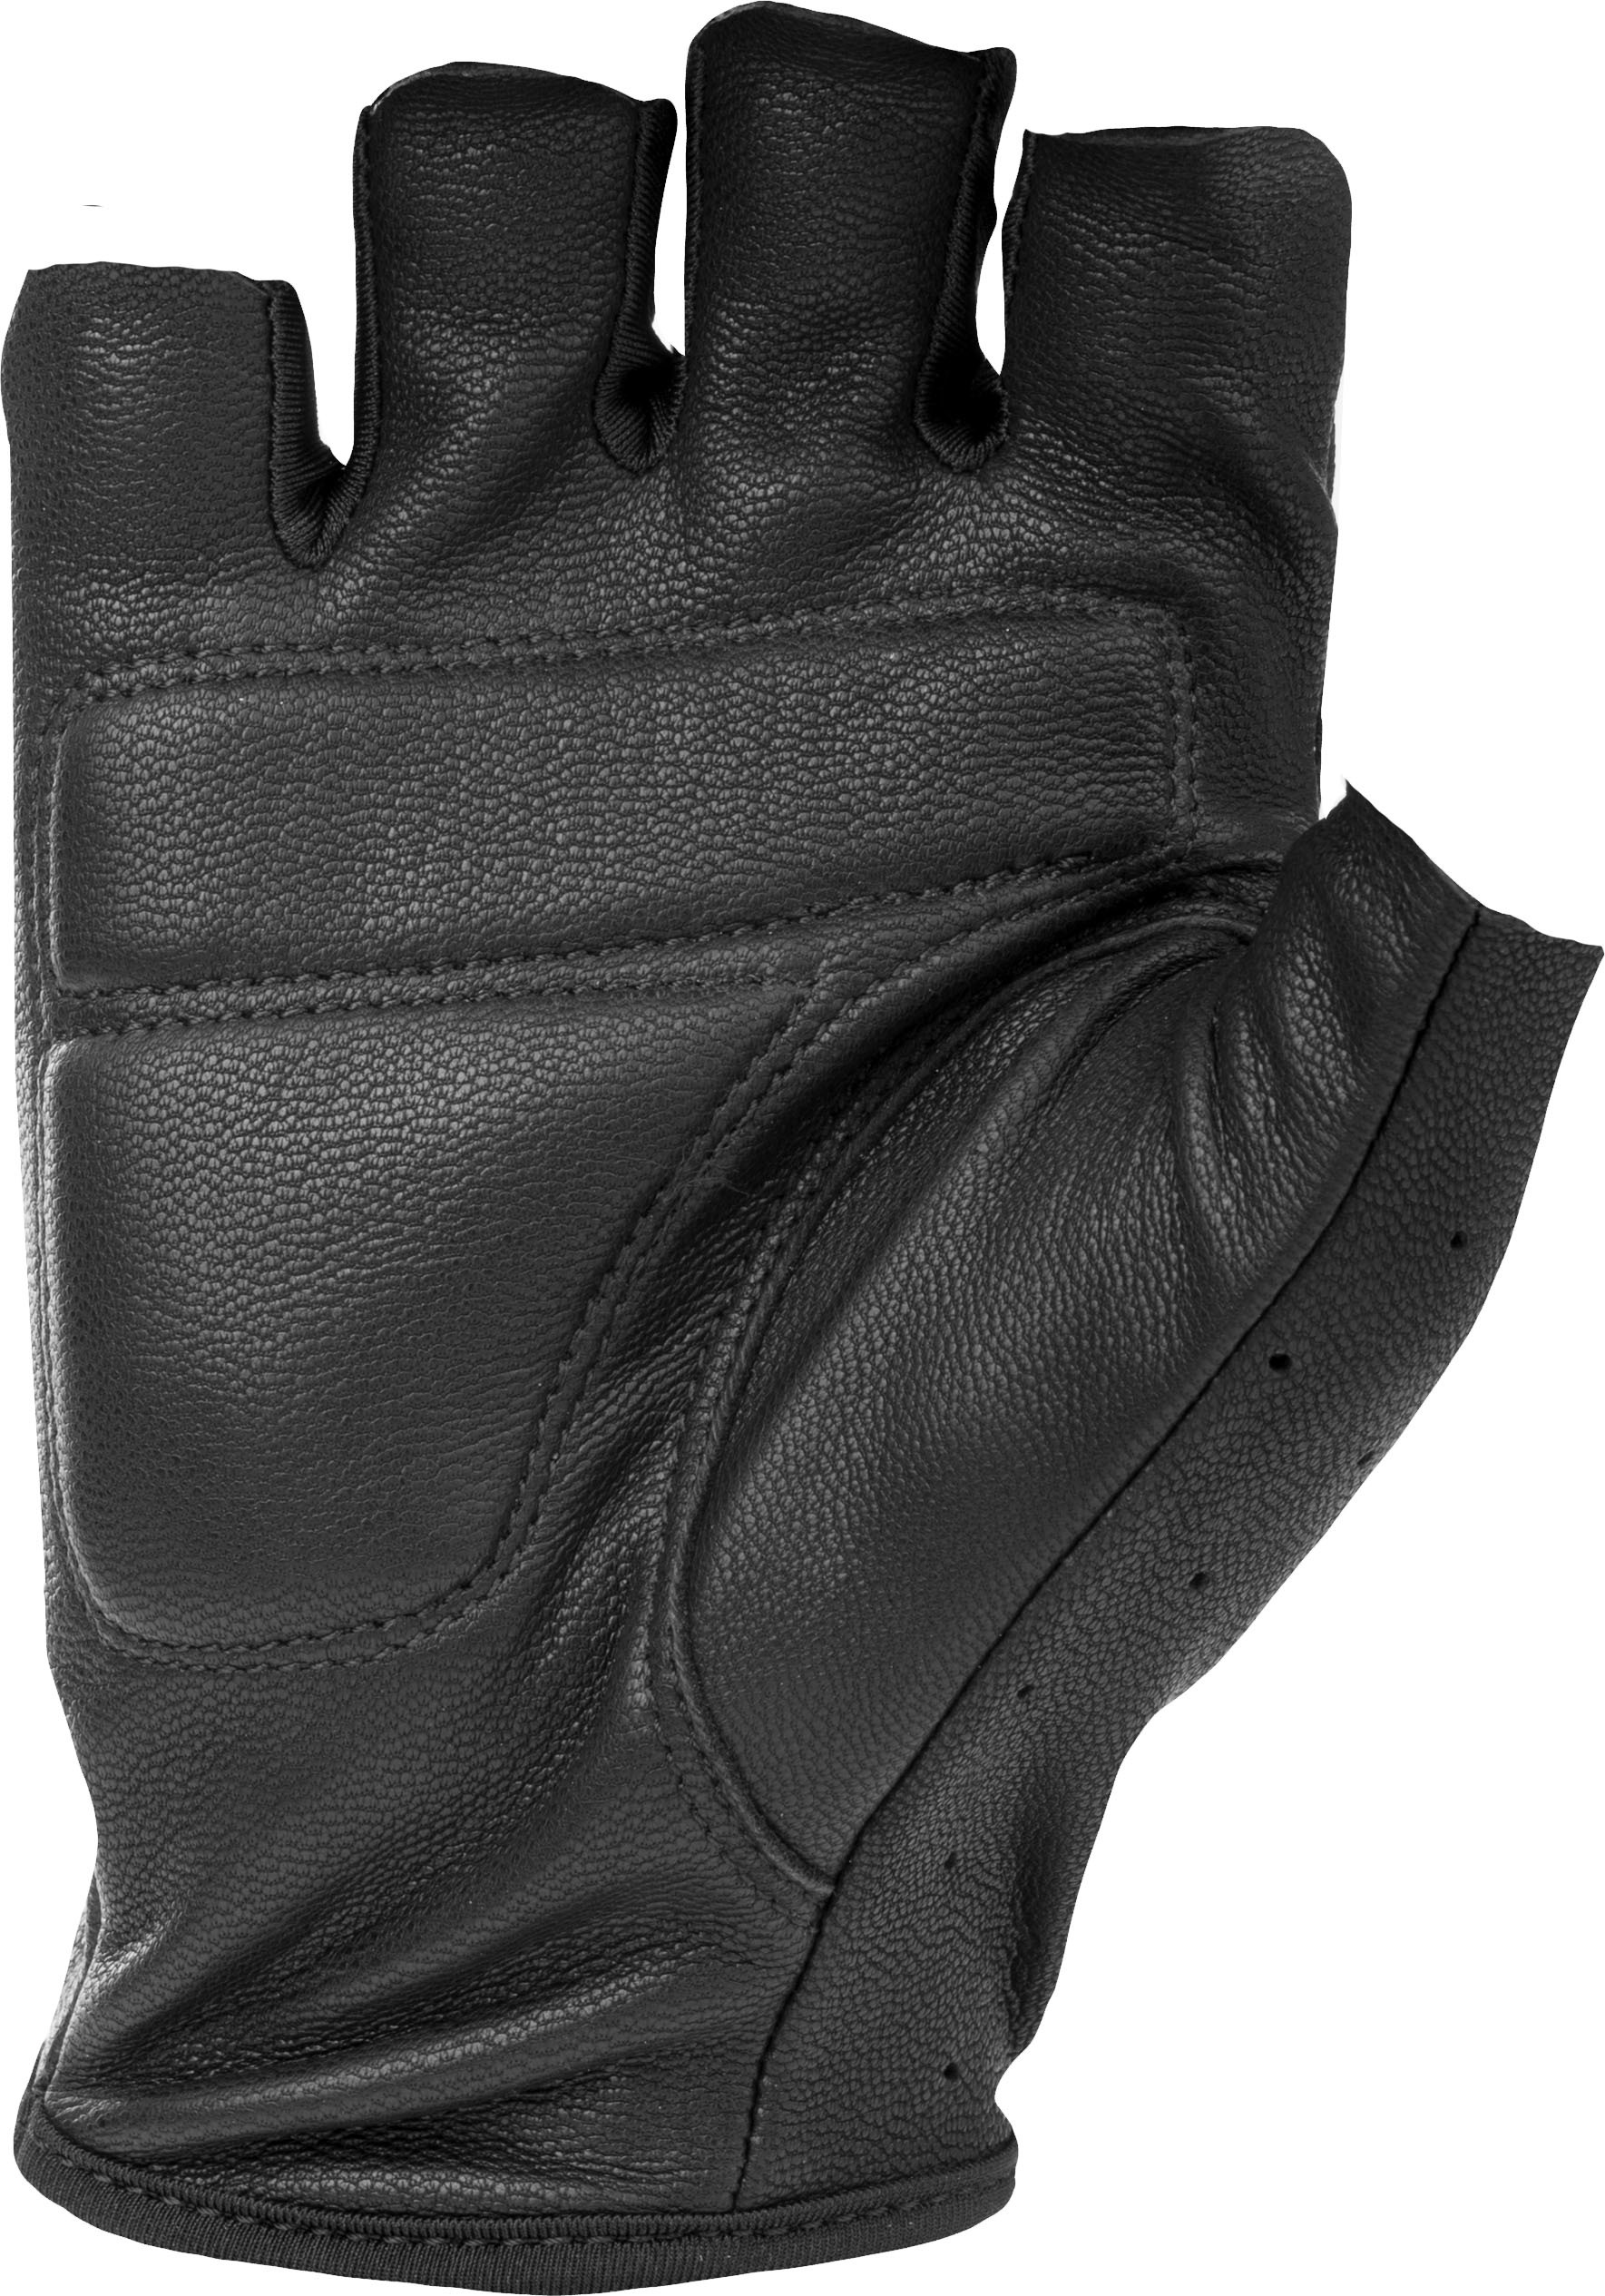 Ranger Riding Gloves Black 5X-Large - Click Image to Close